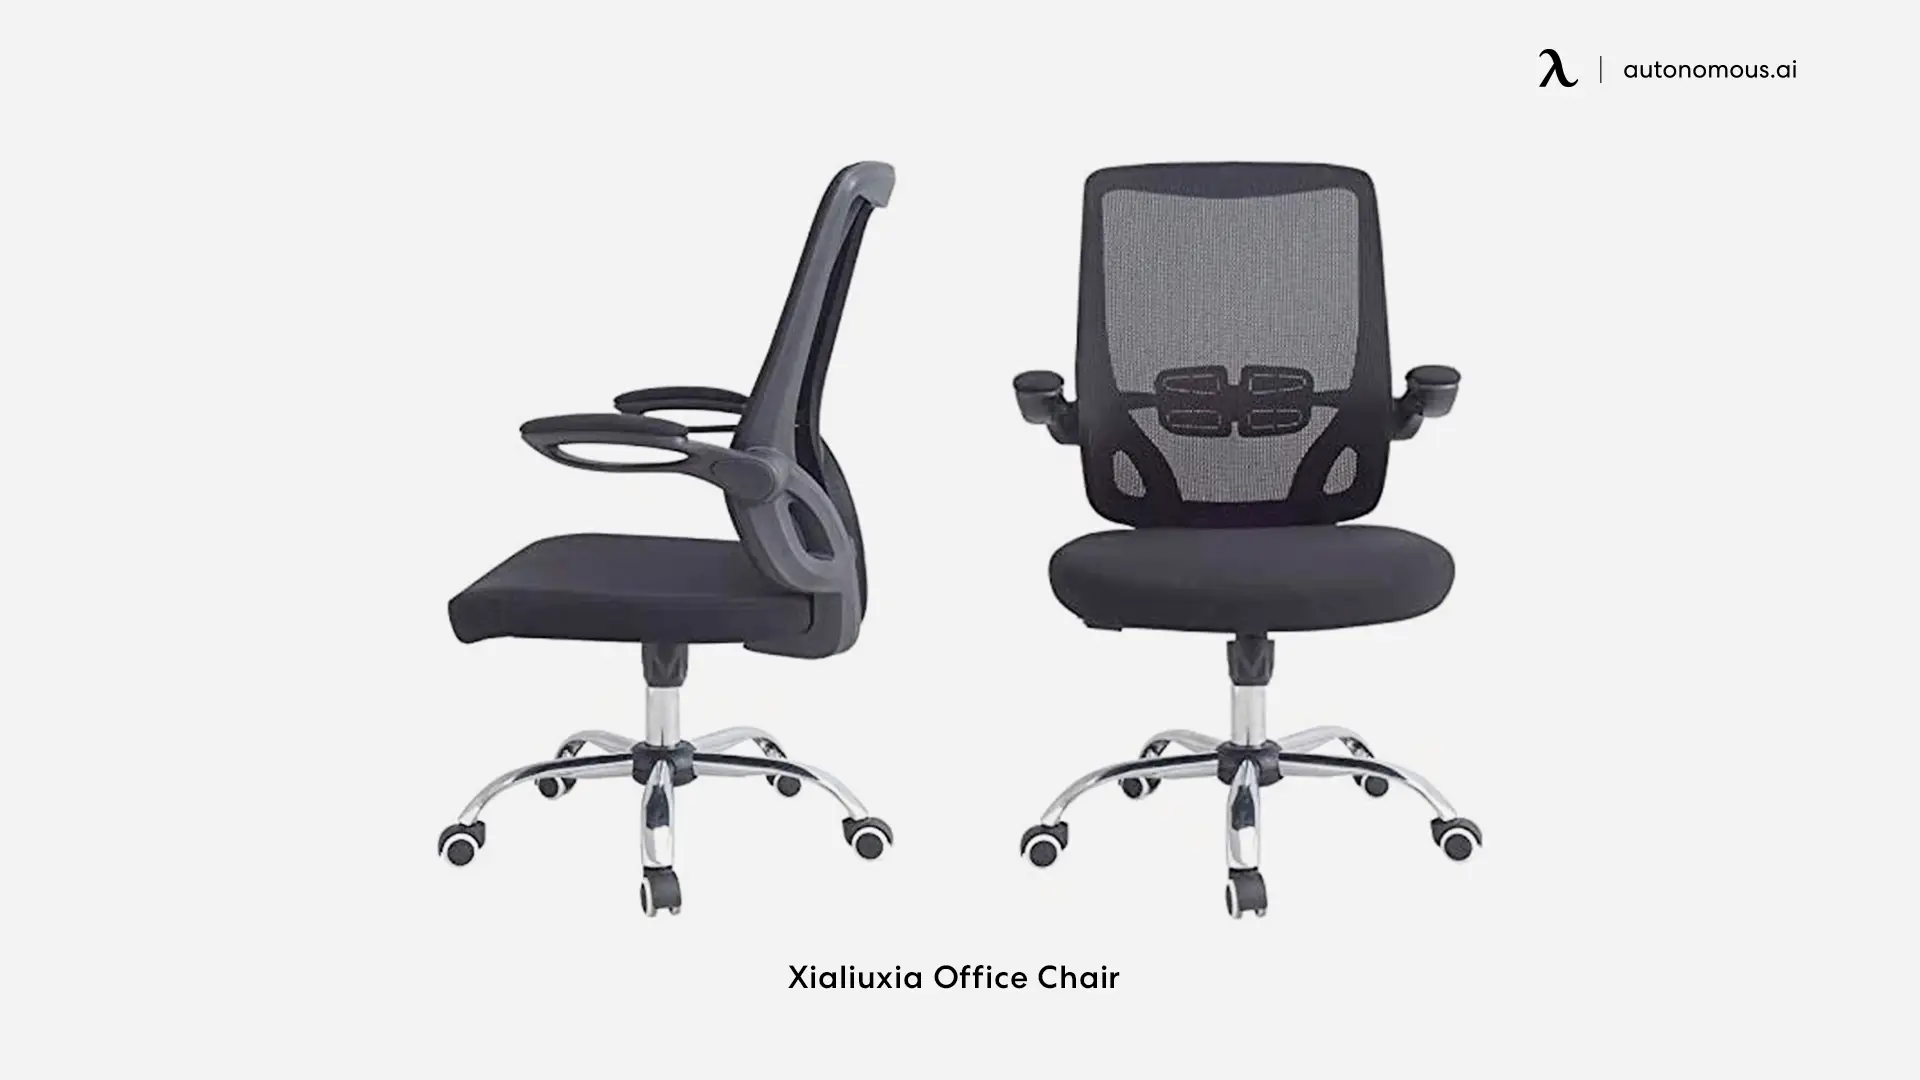 Xialiuxia desk chair with wheels